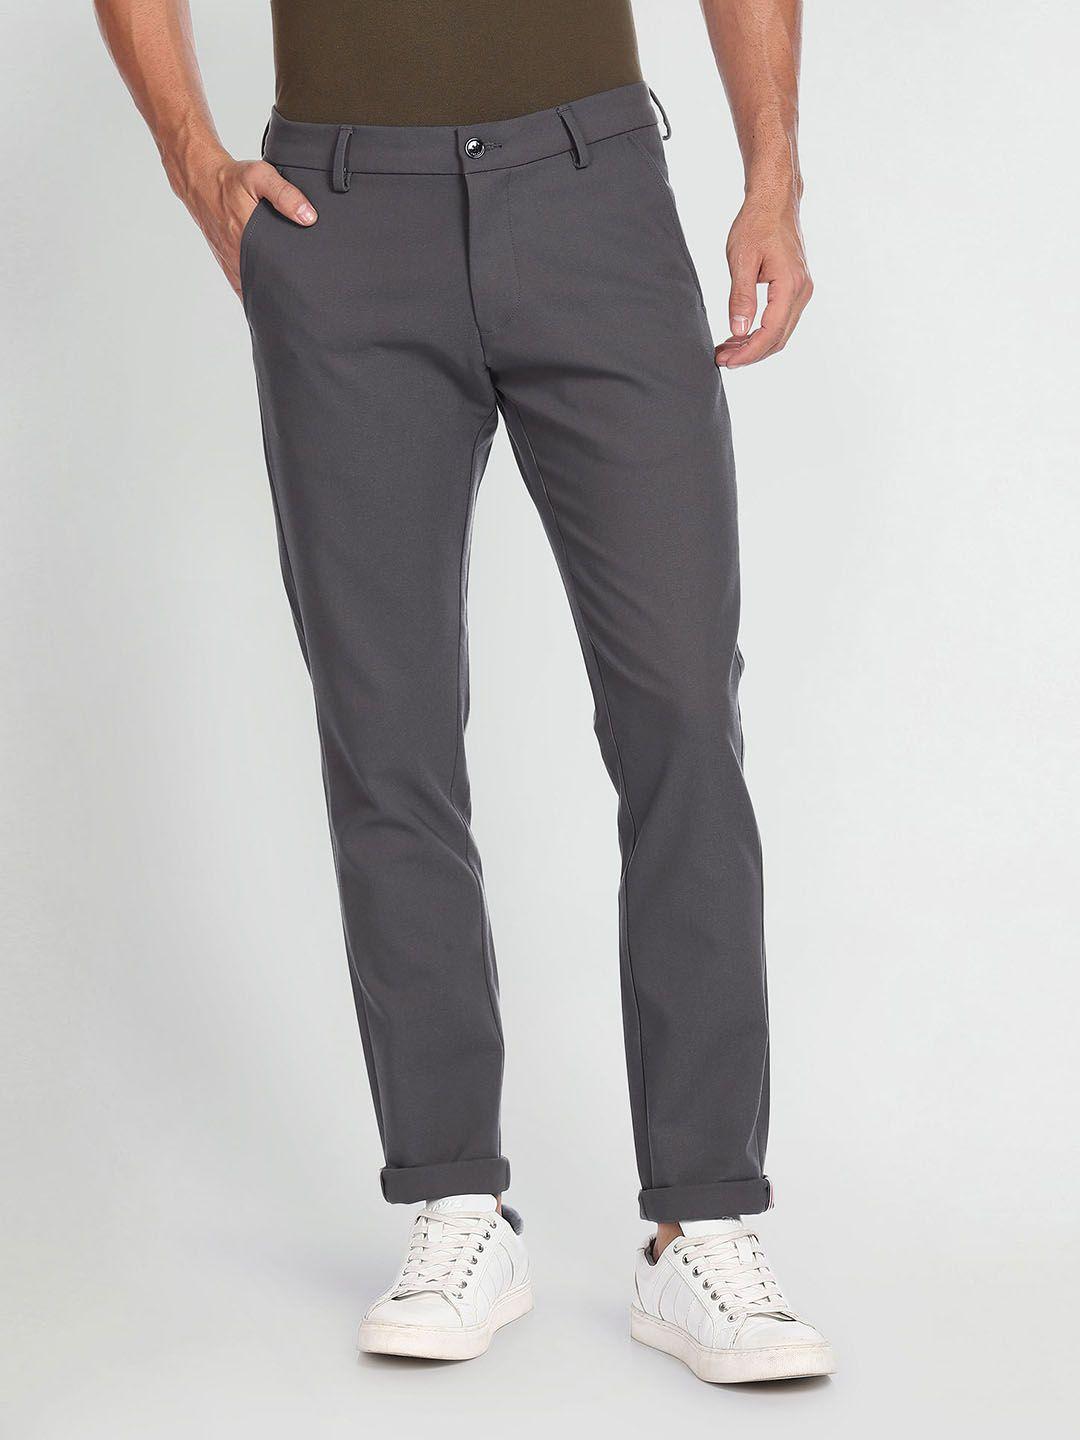 arrow-sport-men-slim-fit-low-rise-trouser